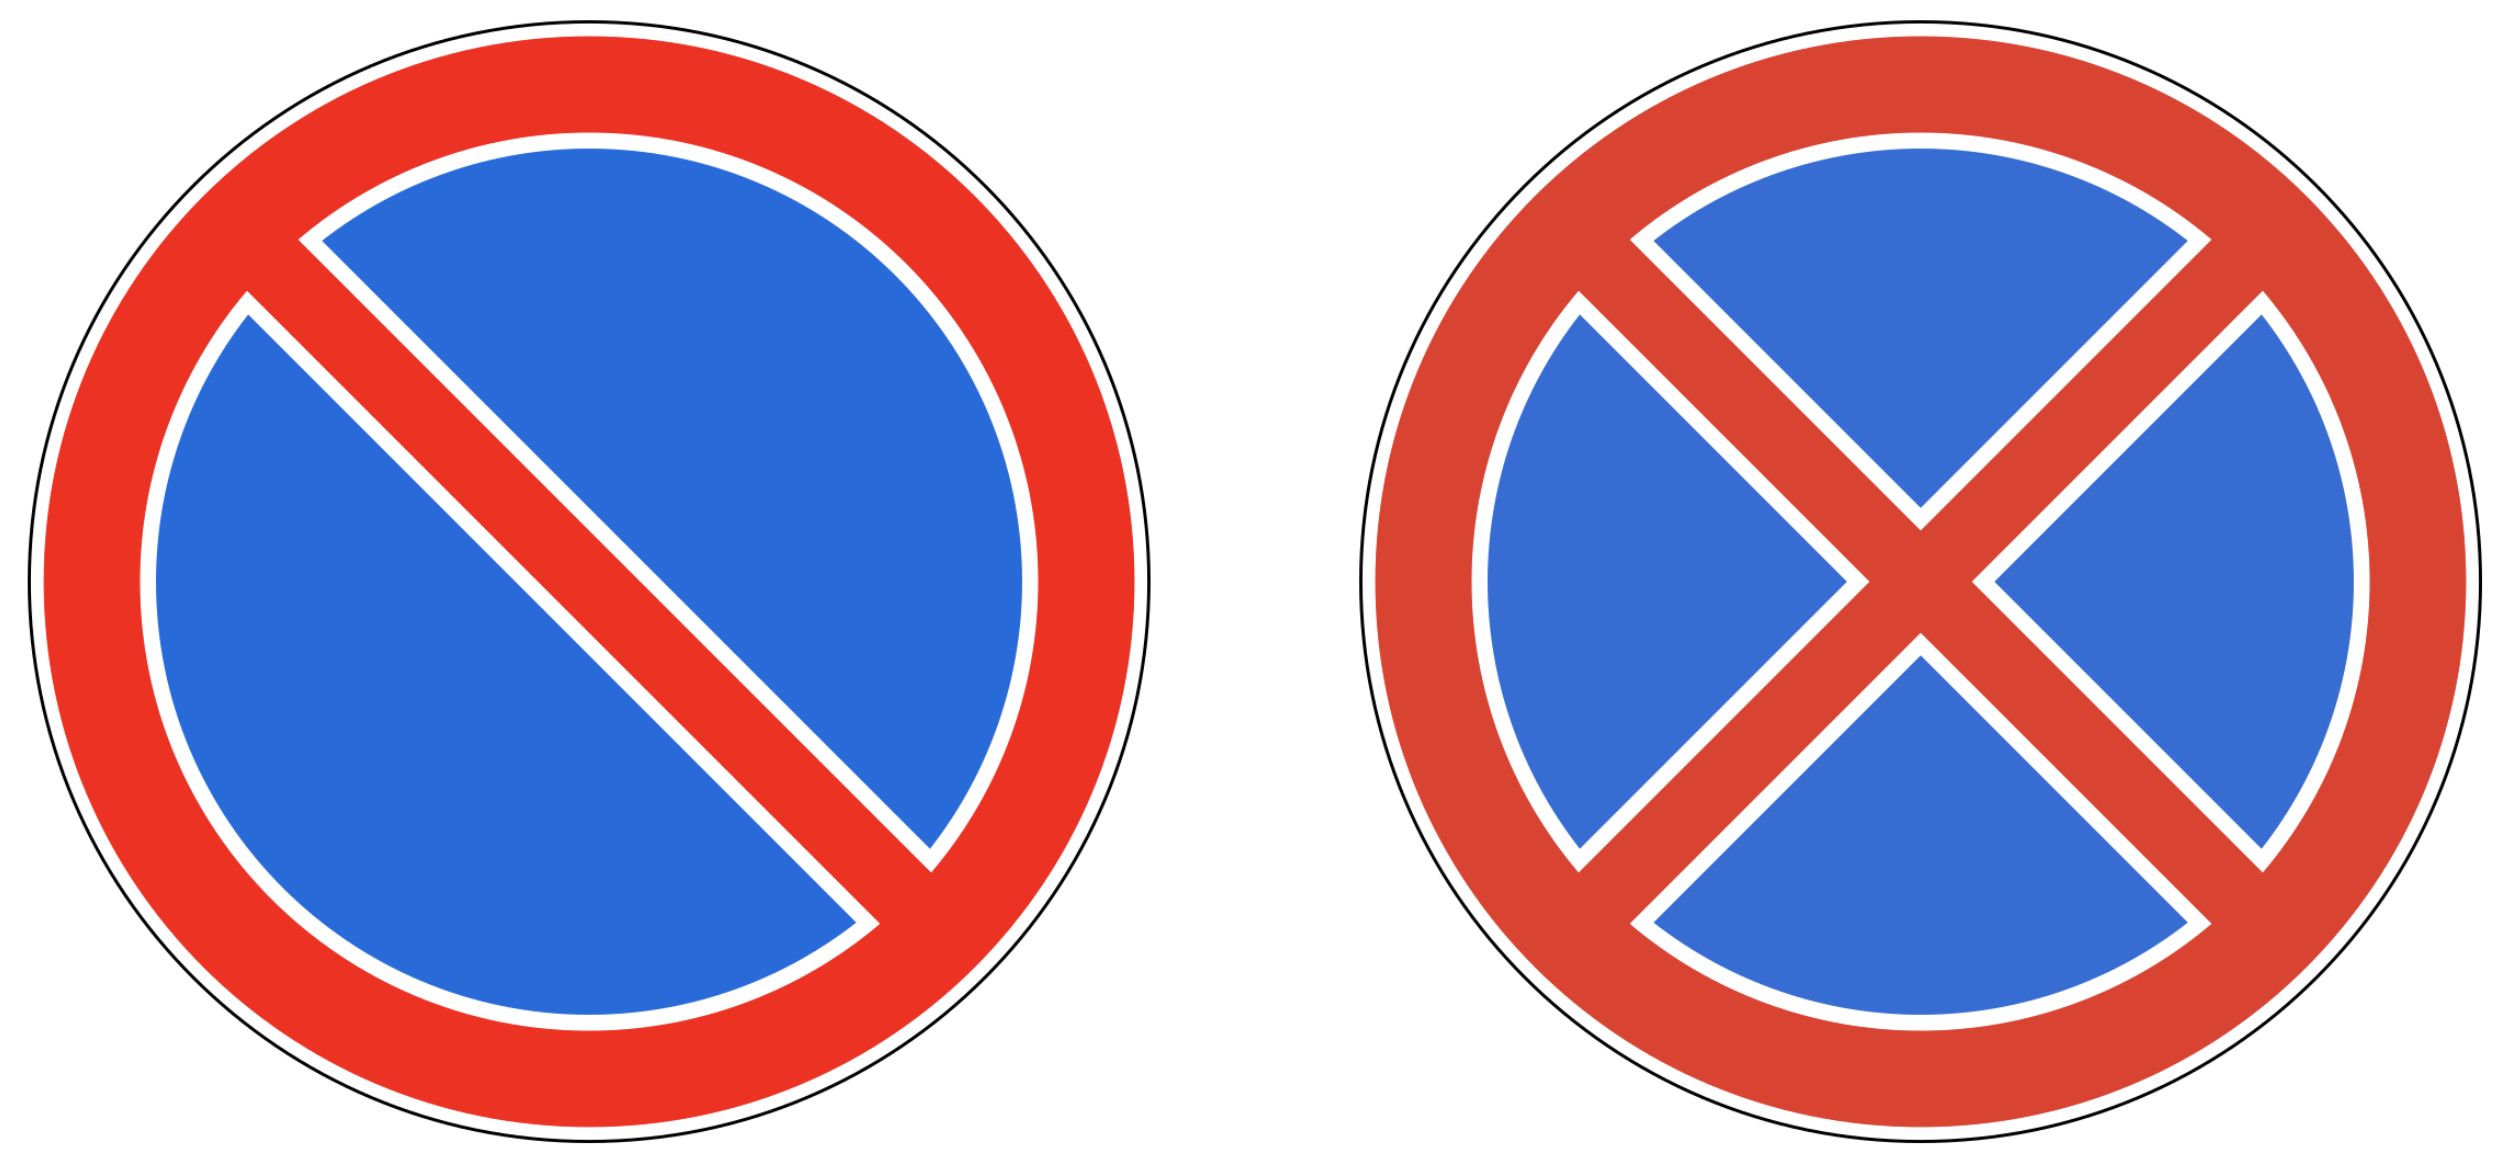 Знаки запрета остановки и стоянки